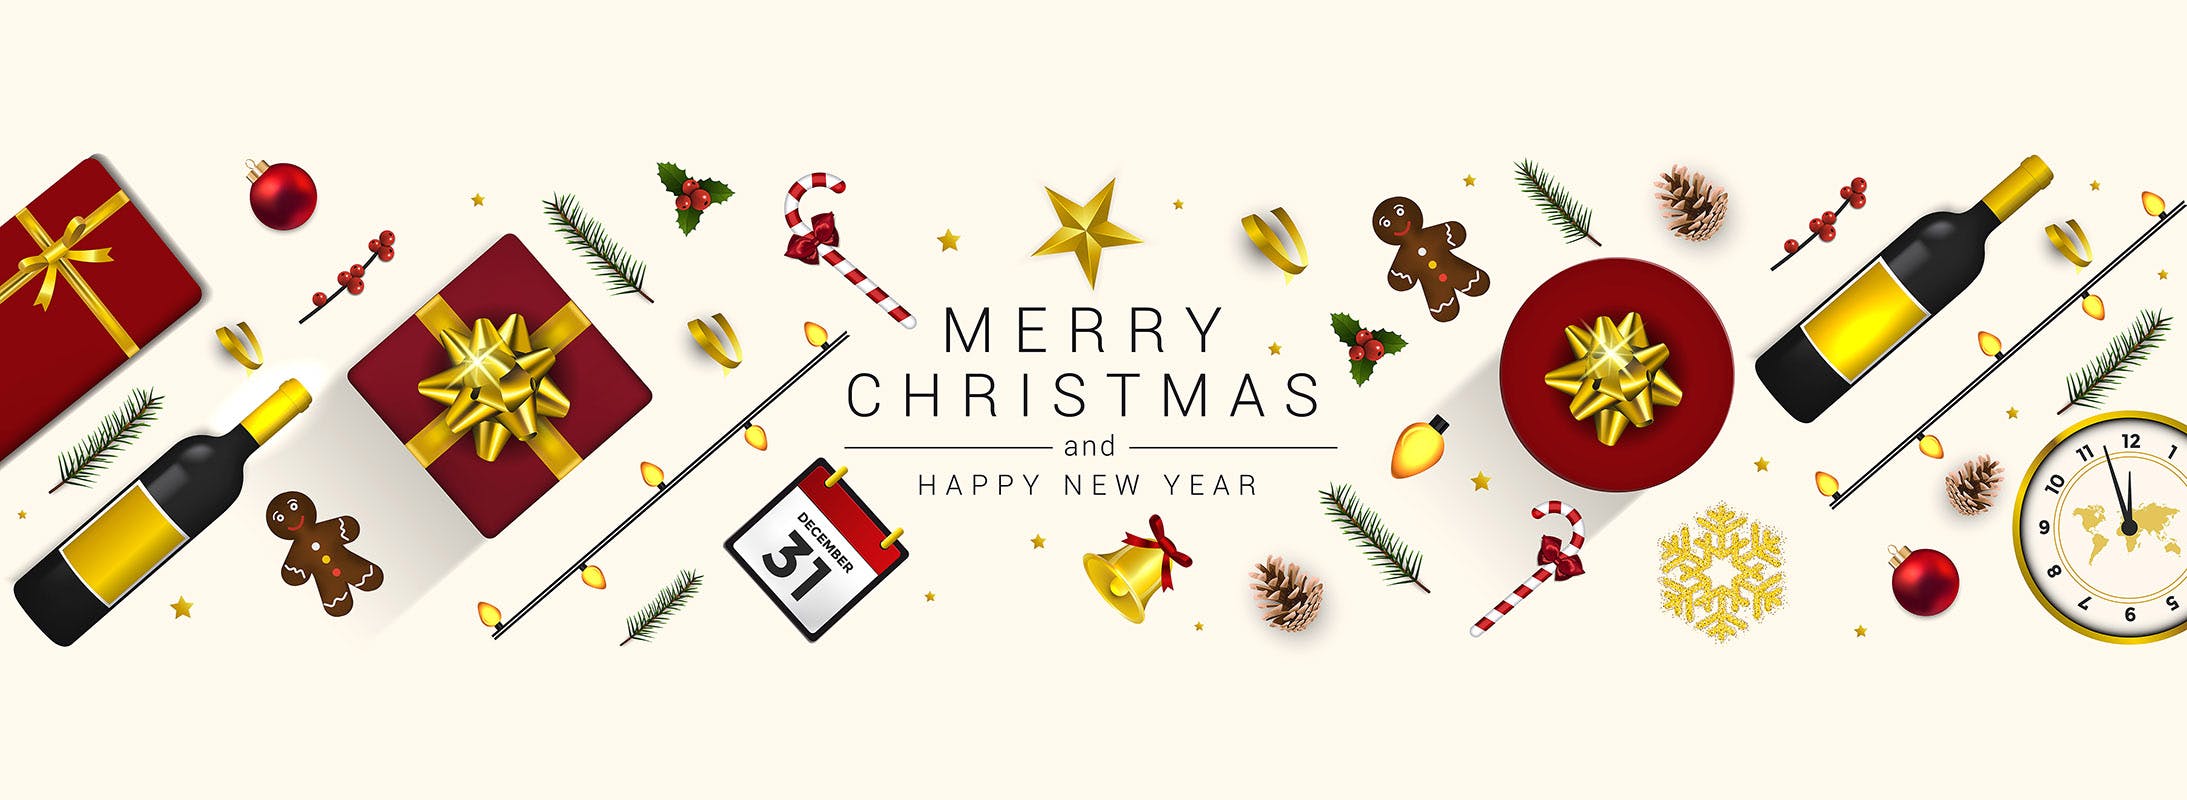 圣诞节/新年祝福主题贺卡设计模板v1 Merry Christmas and Happy New Year greeting cards插图(5)